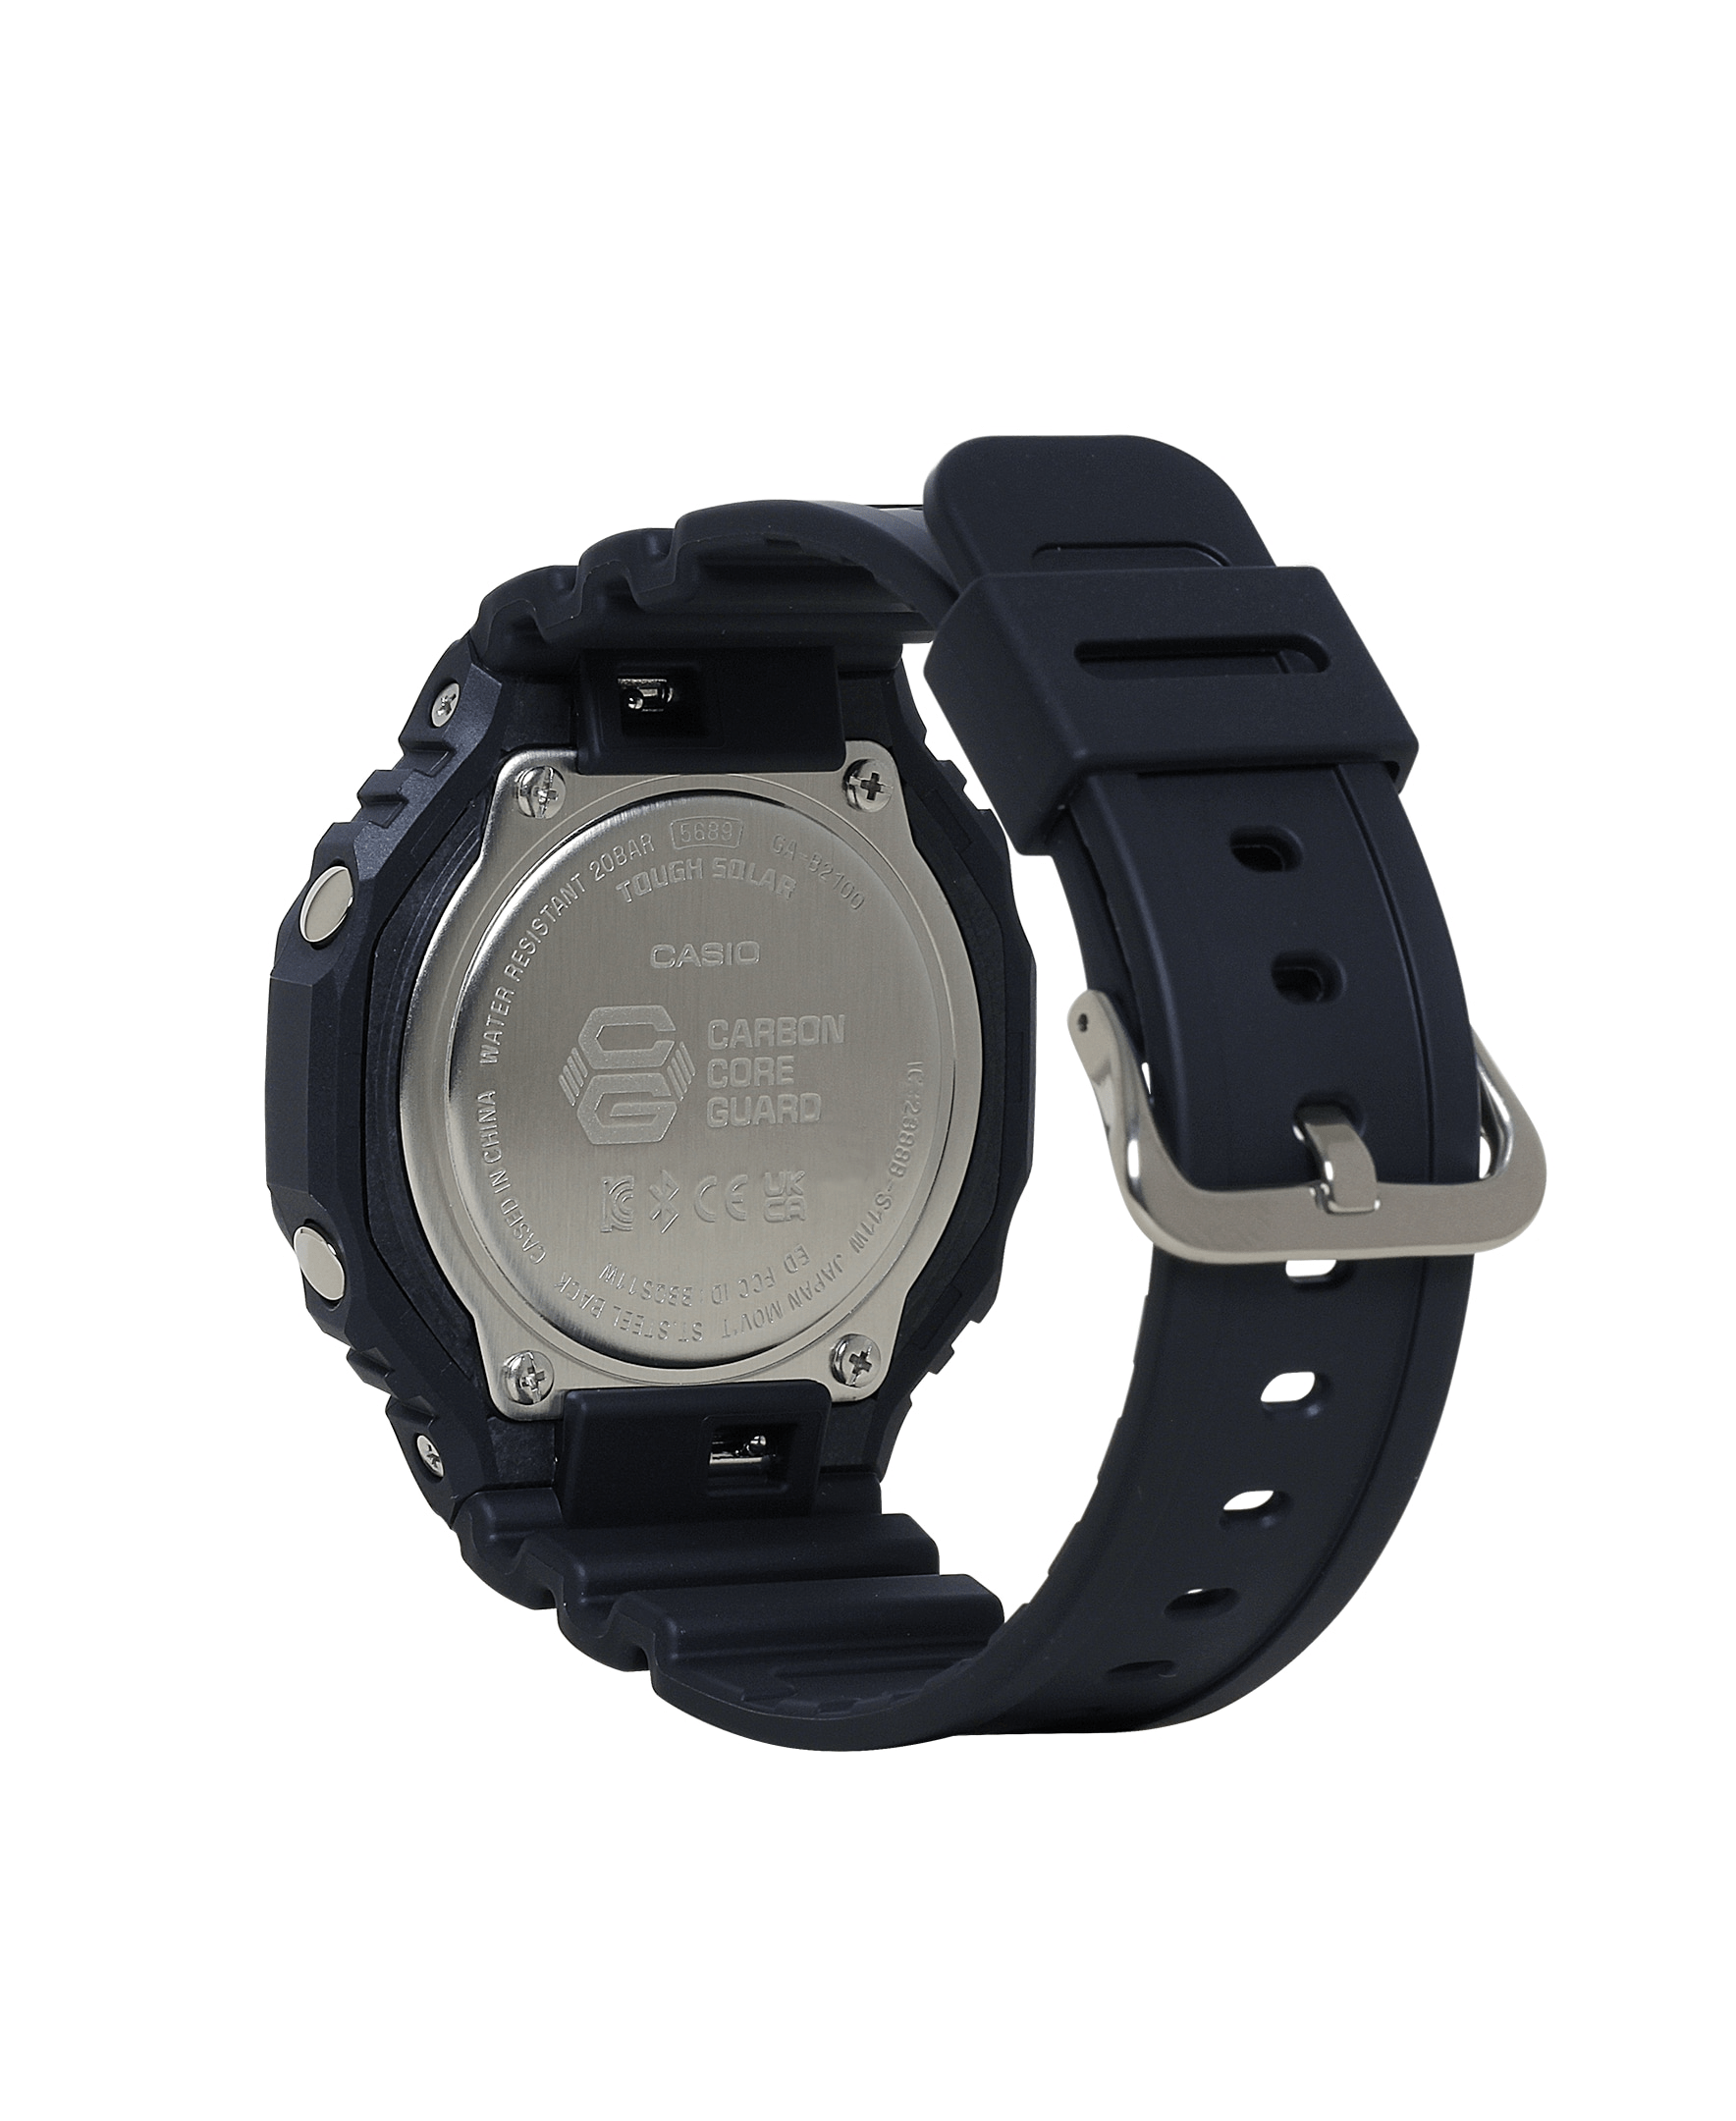 GAS100-1A | Silver Analog-Digital Men's Tough Solar Watch - G-SHOCK | CASIO